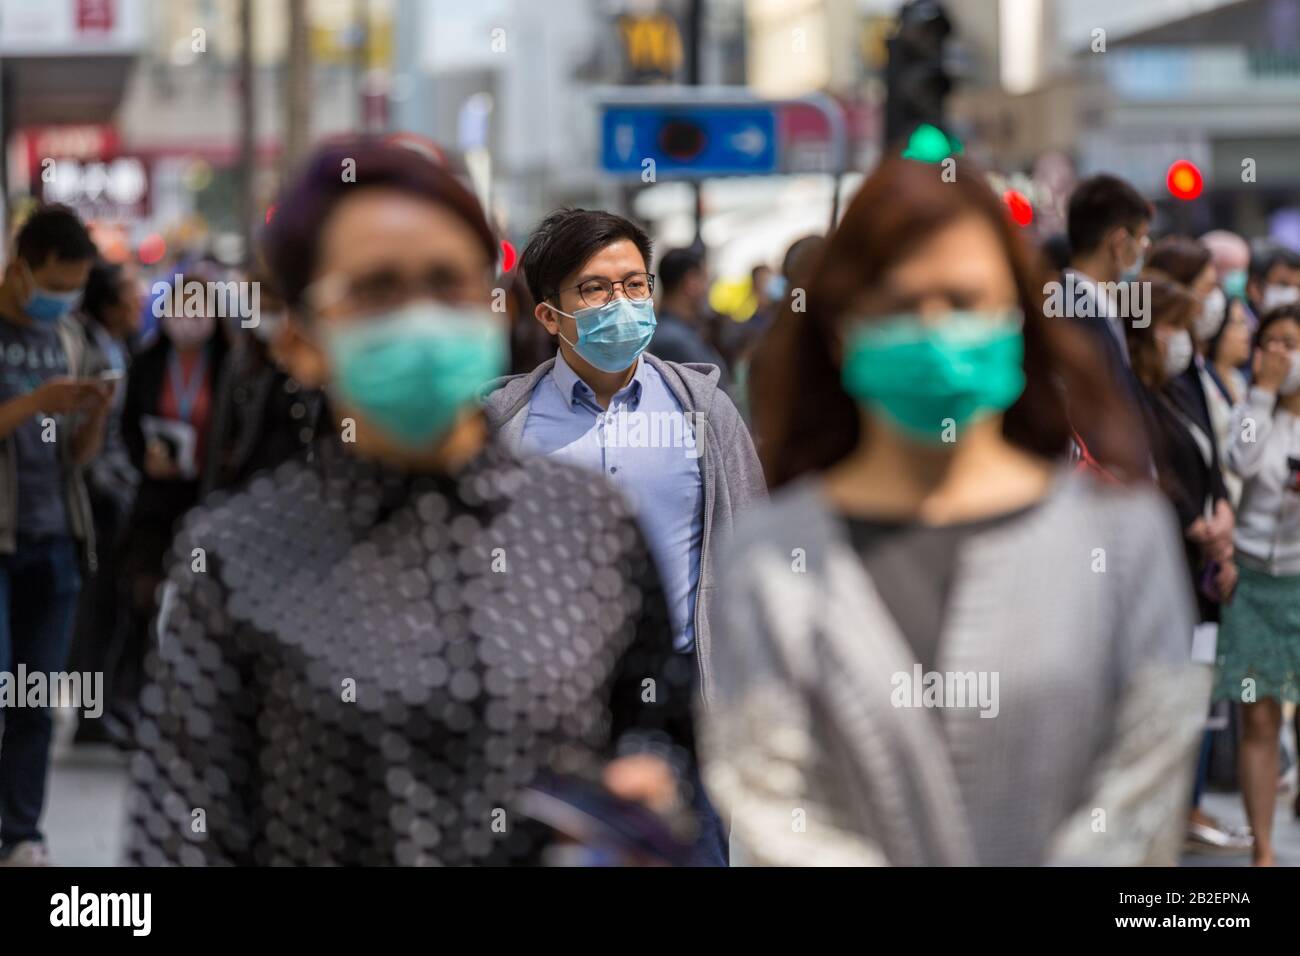 People wearing masks during the Corona Virus. Stock Photo